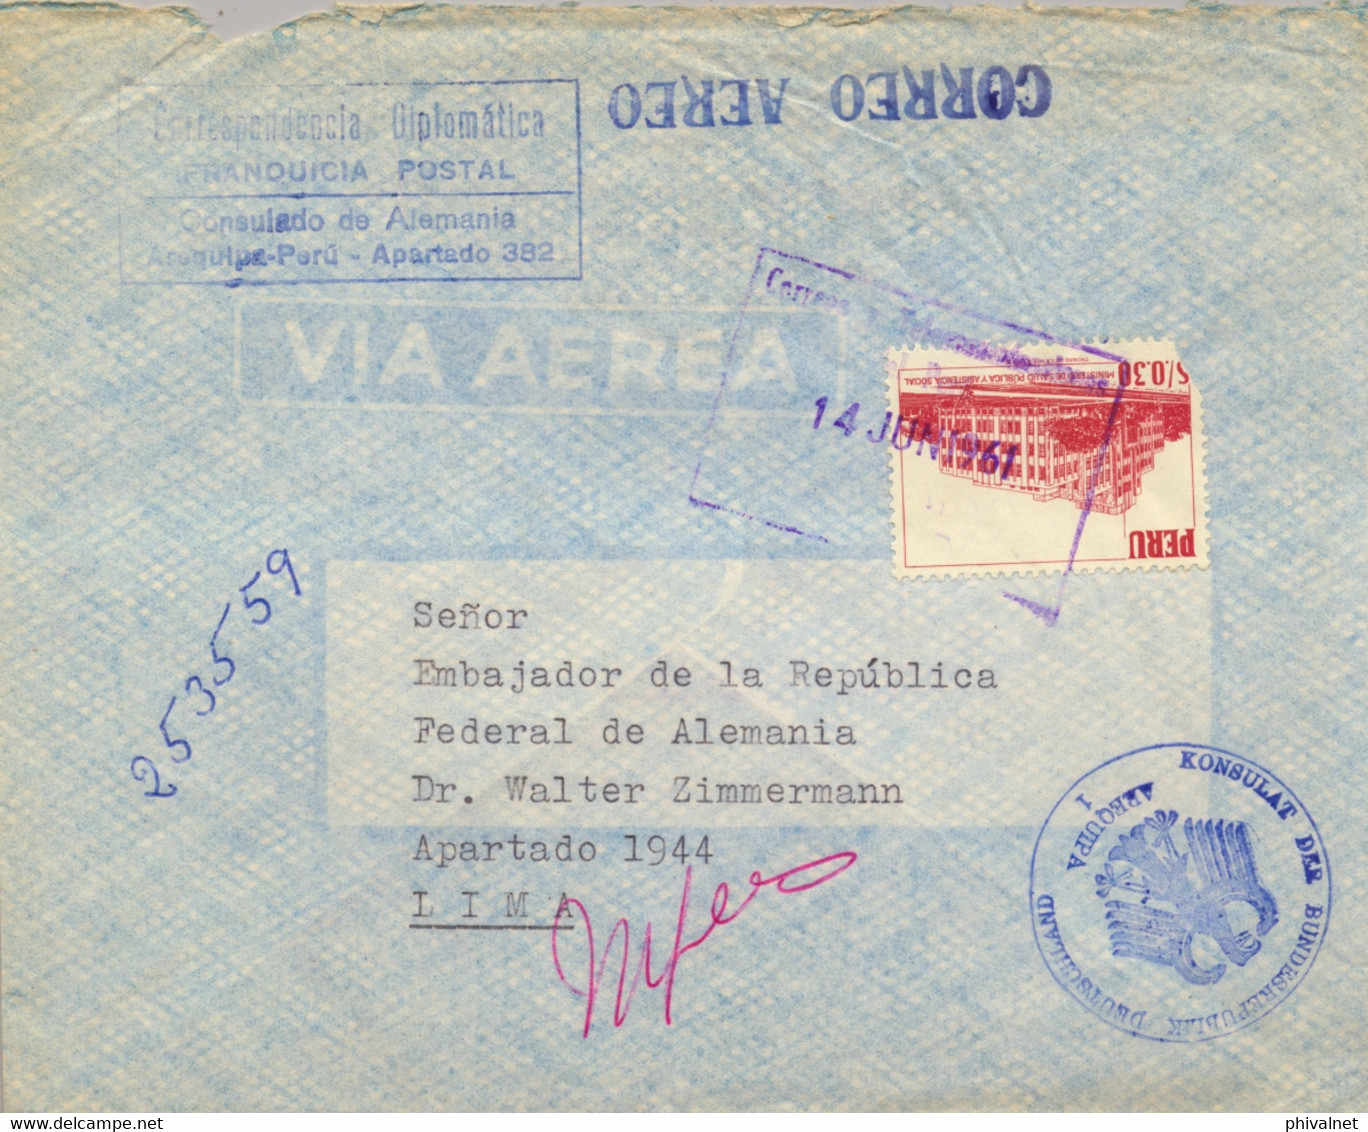 1961 PERÚ , SOBRE CIRCULADO ENTRE AREQUIPA Y LIMA , CORREO CONSULAR , CORRESPONDENCIA DIPLOMÁTICA / FRANQUICIA POSTAL - Perú